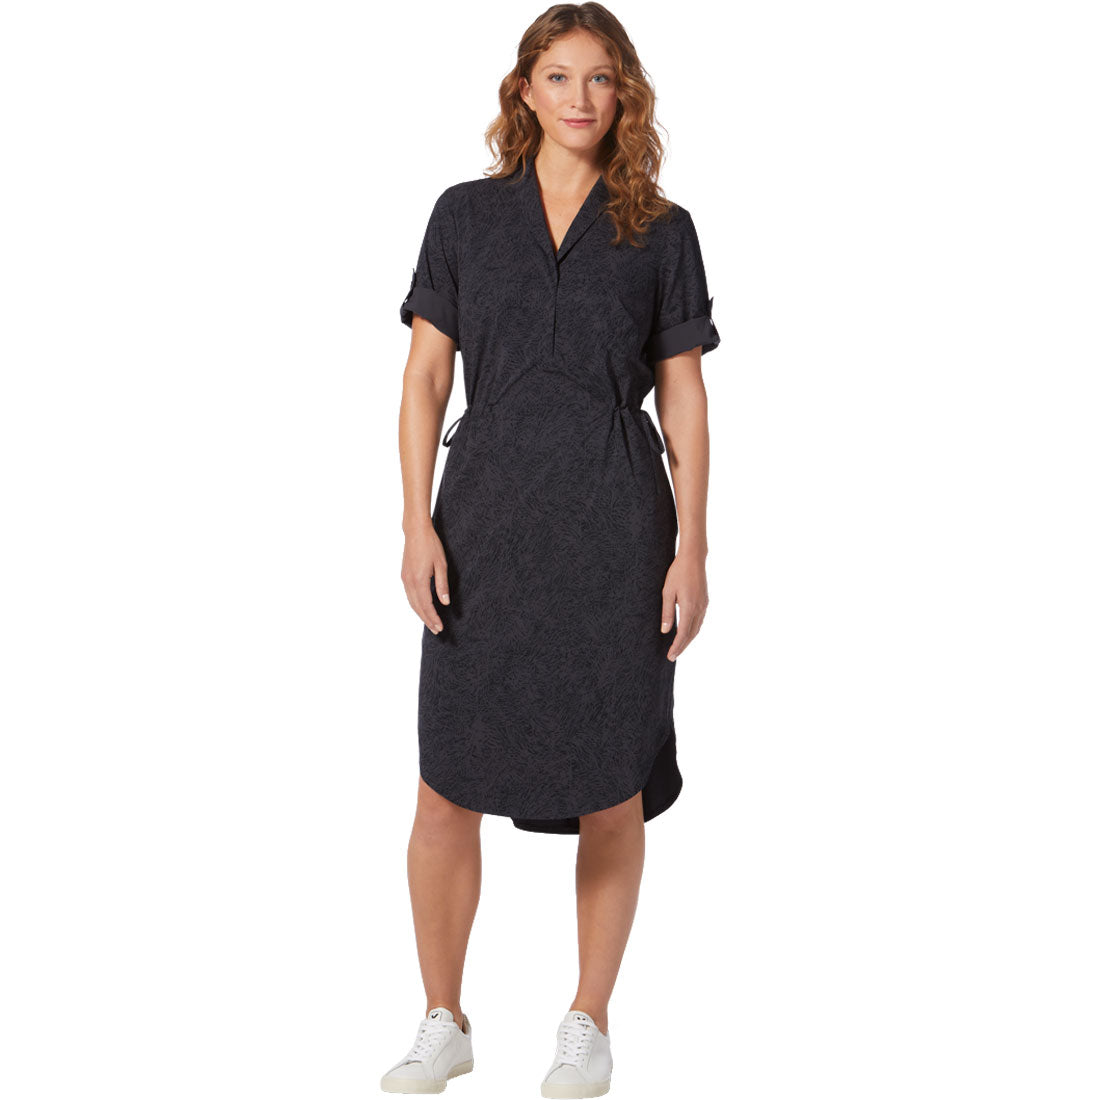 Royal Robbins Spotless Traveler Short Sleeve Dress - Women's